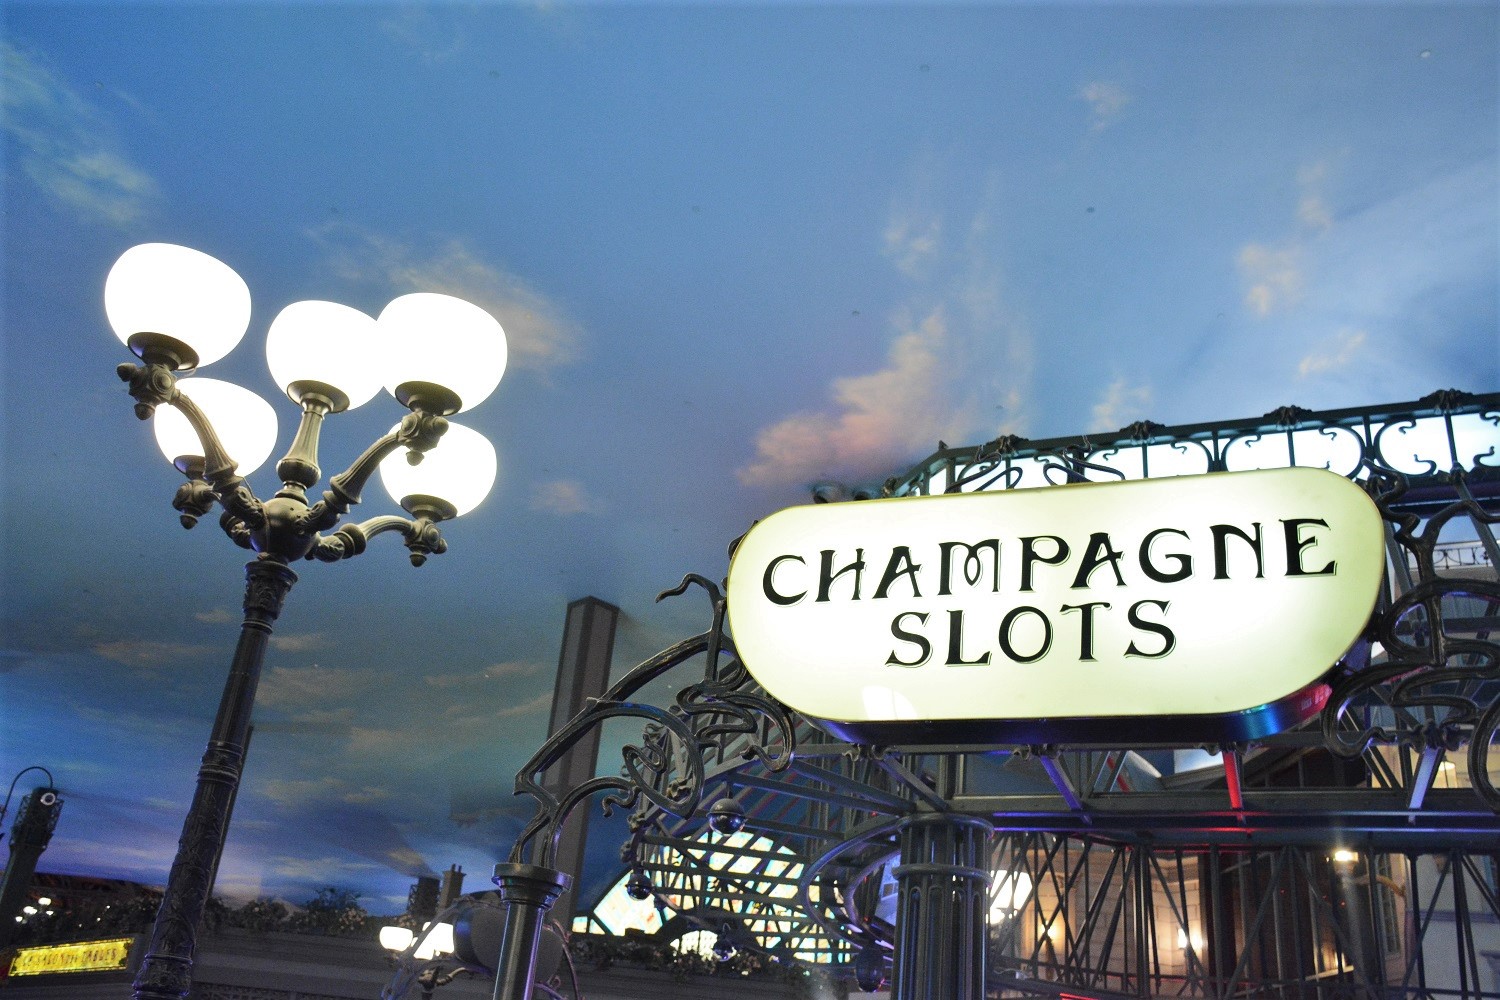 Champagne Slots